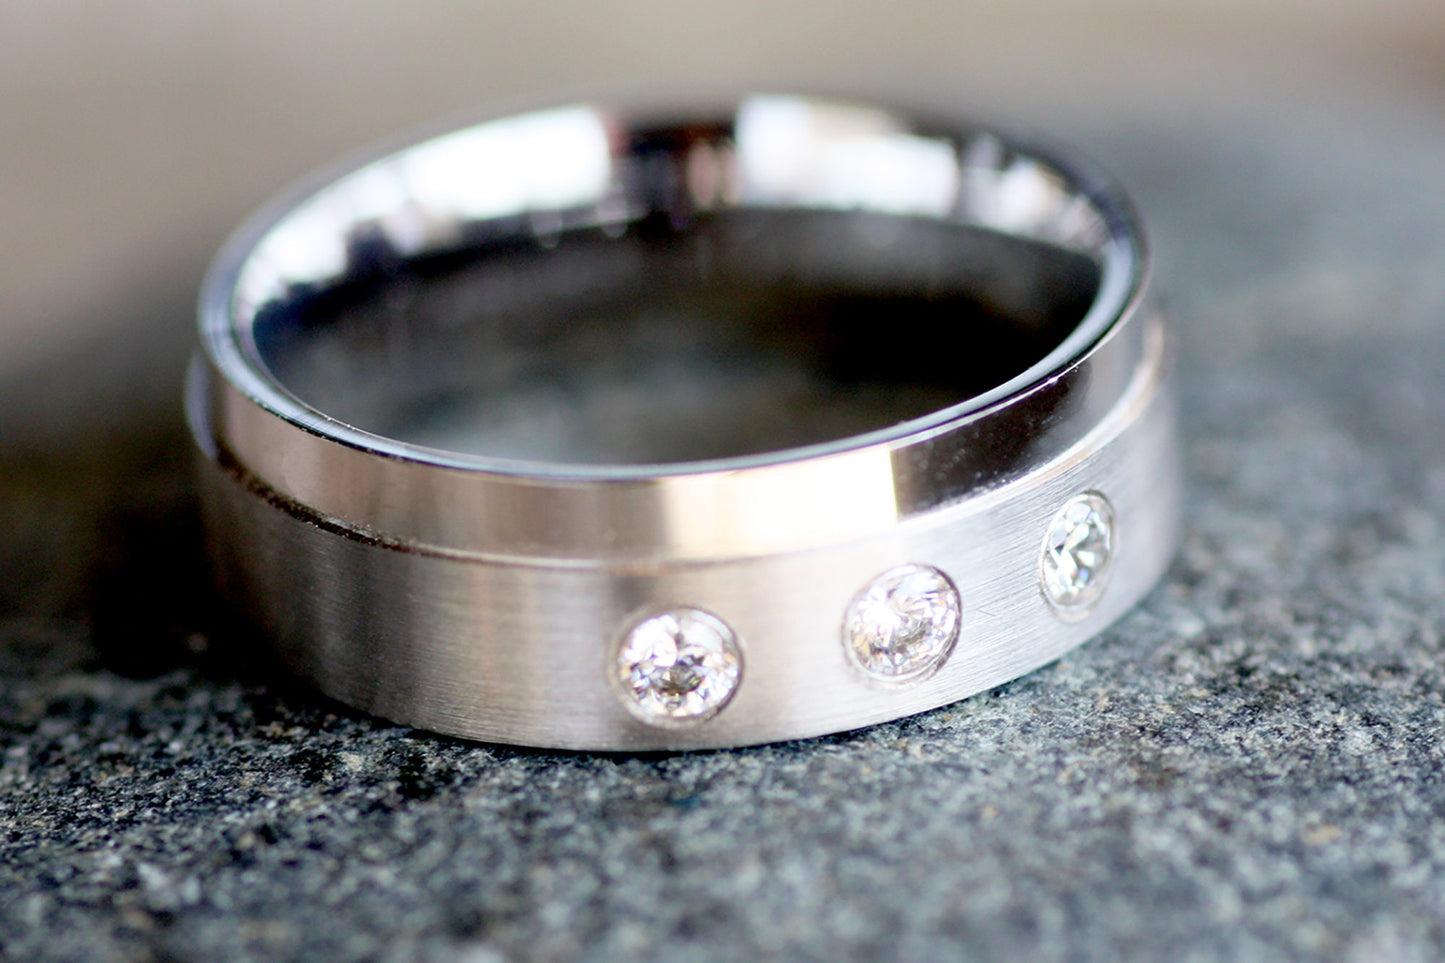 Satin and shinny Gold wedding ring with diamond